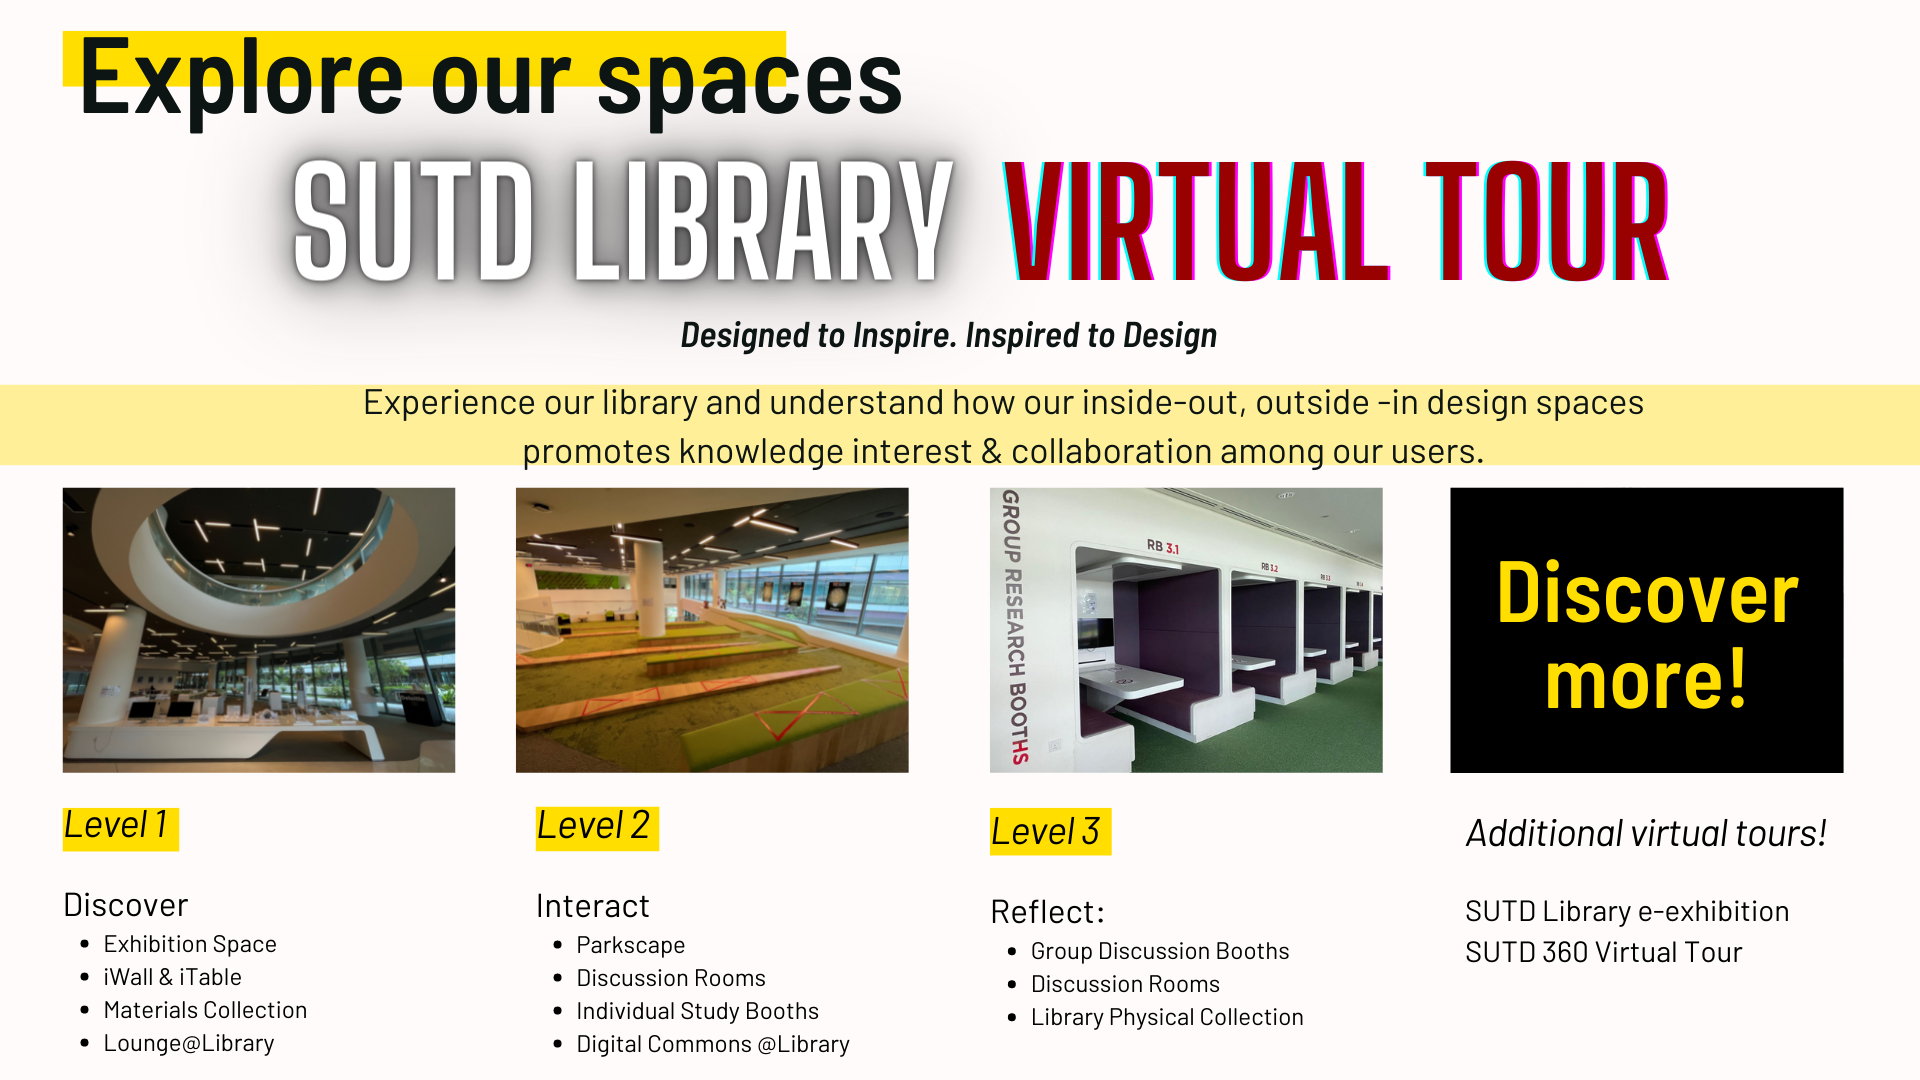 SUTD Library Virtual Tour